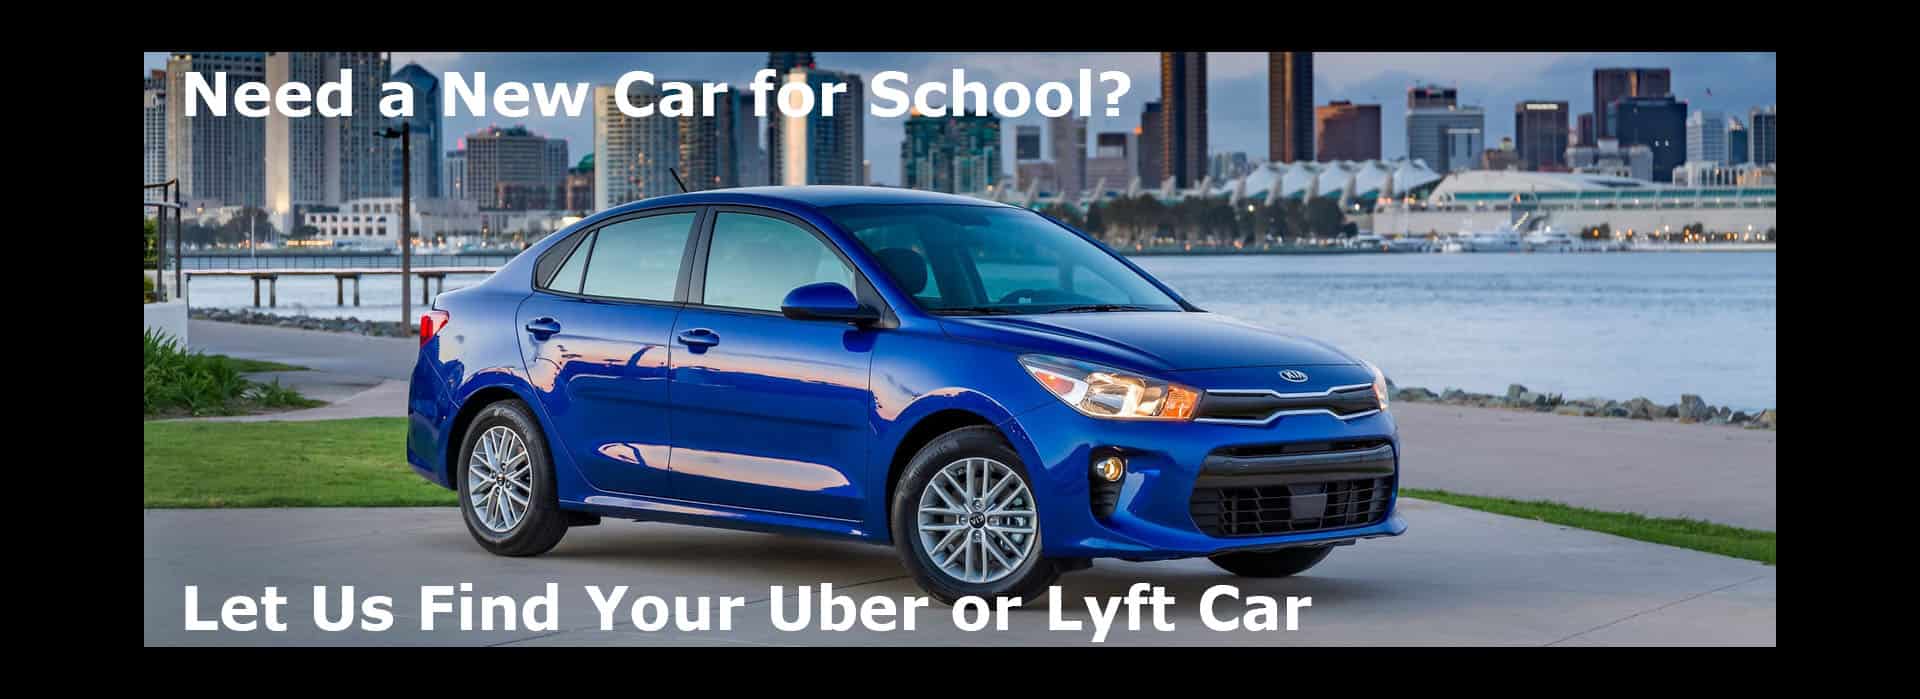 Find Uber or Lyft Car in Orange County, CA